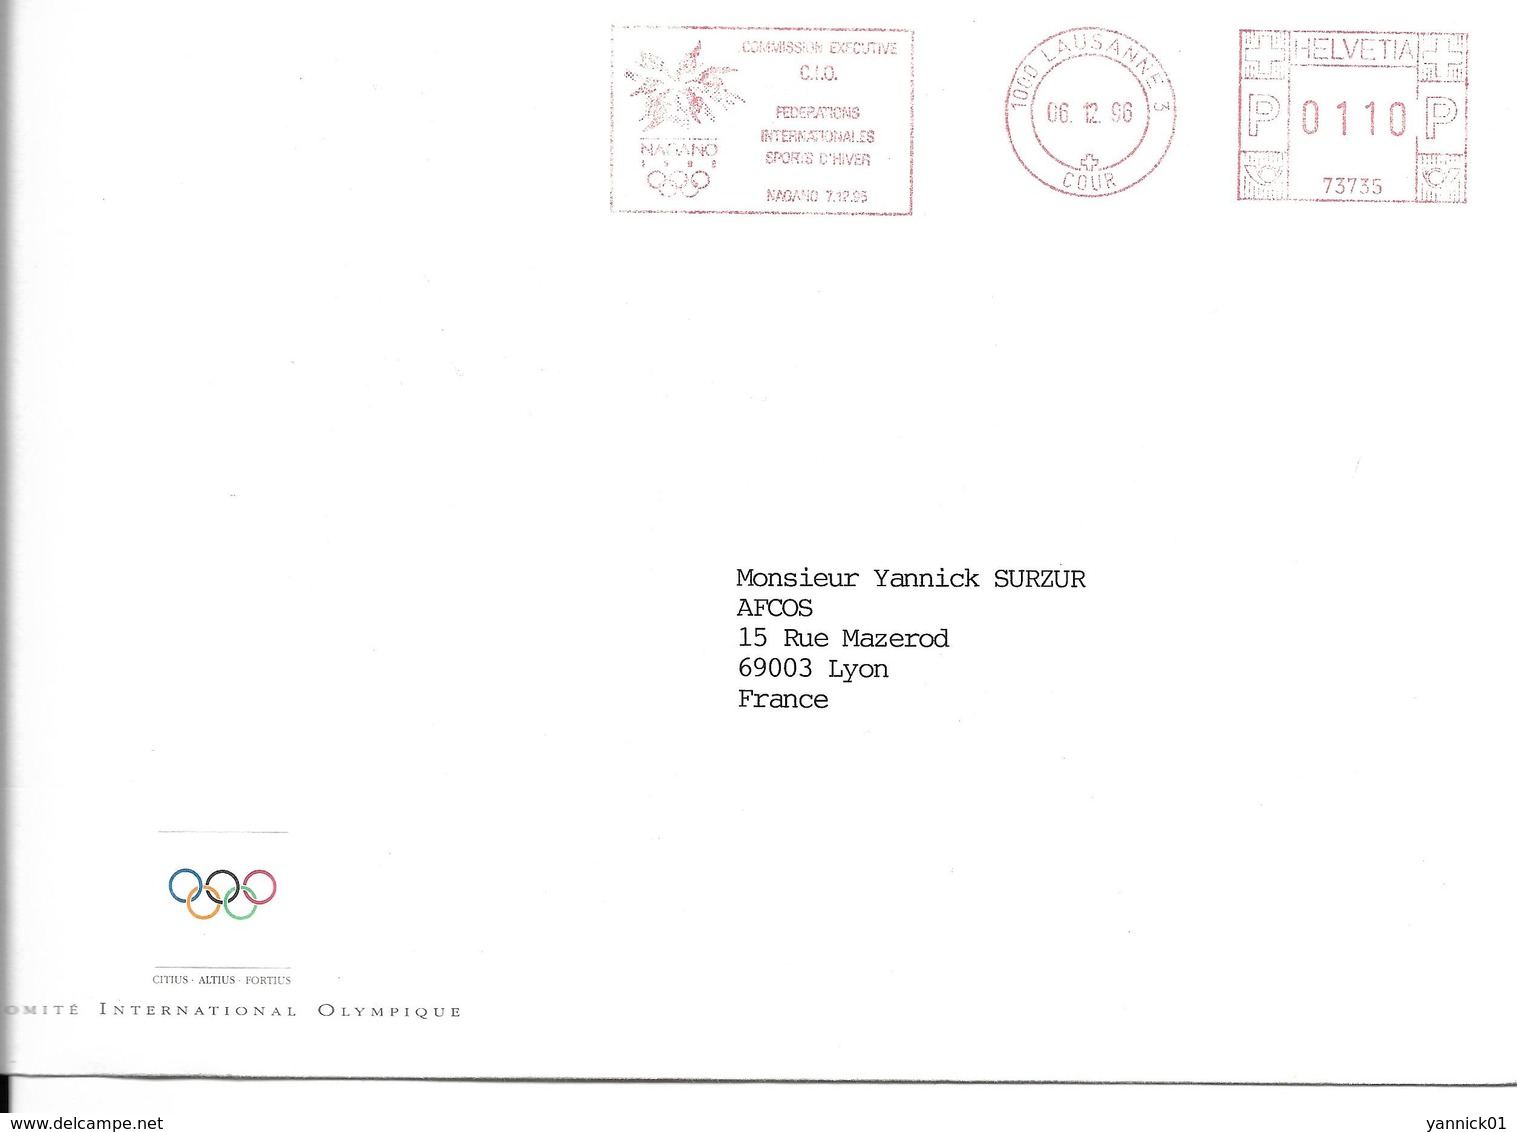 JEUX OLYMPIQUES HIVER - OLYMPICS WINTER GAMES NAGANO 1998 - CIO COMMISION EXECUTIVE - Winter 1998: Nagano